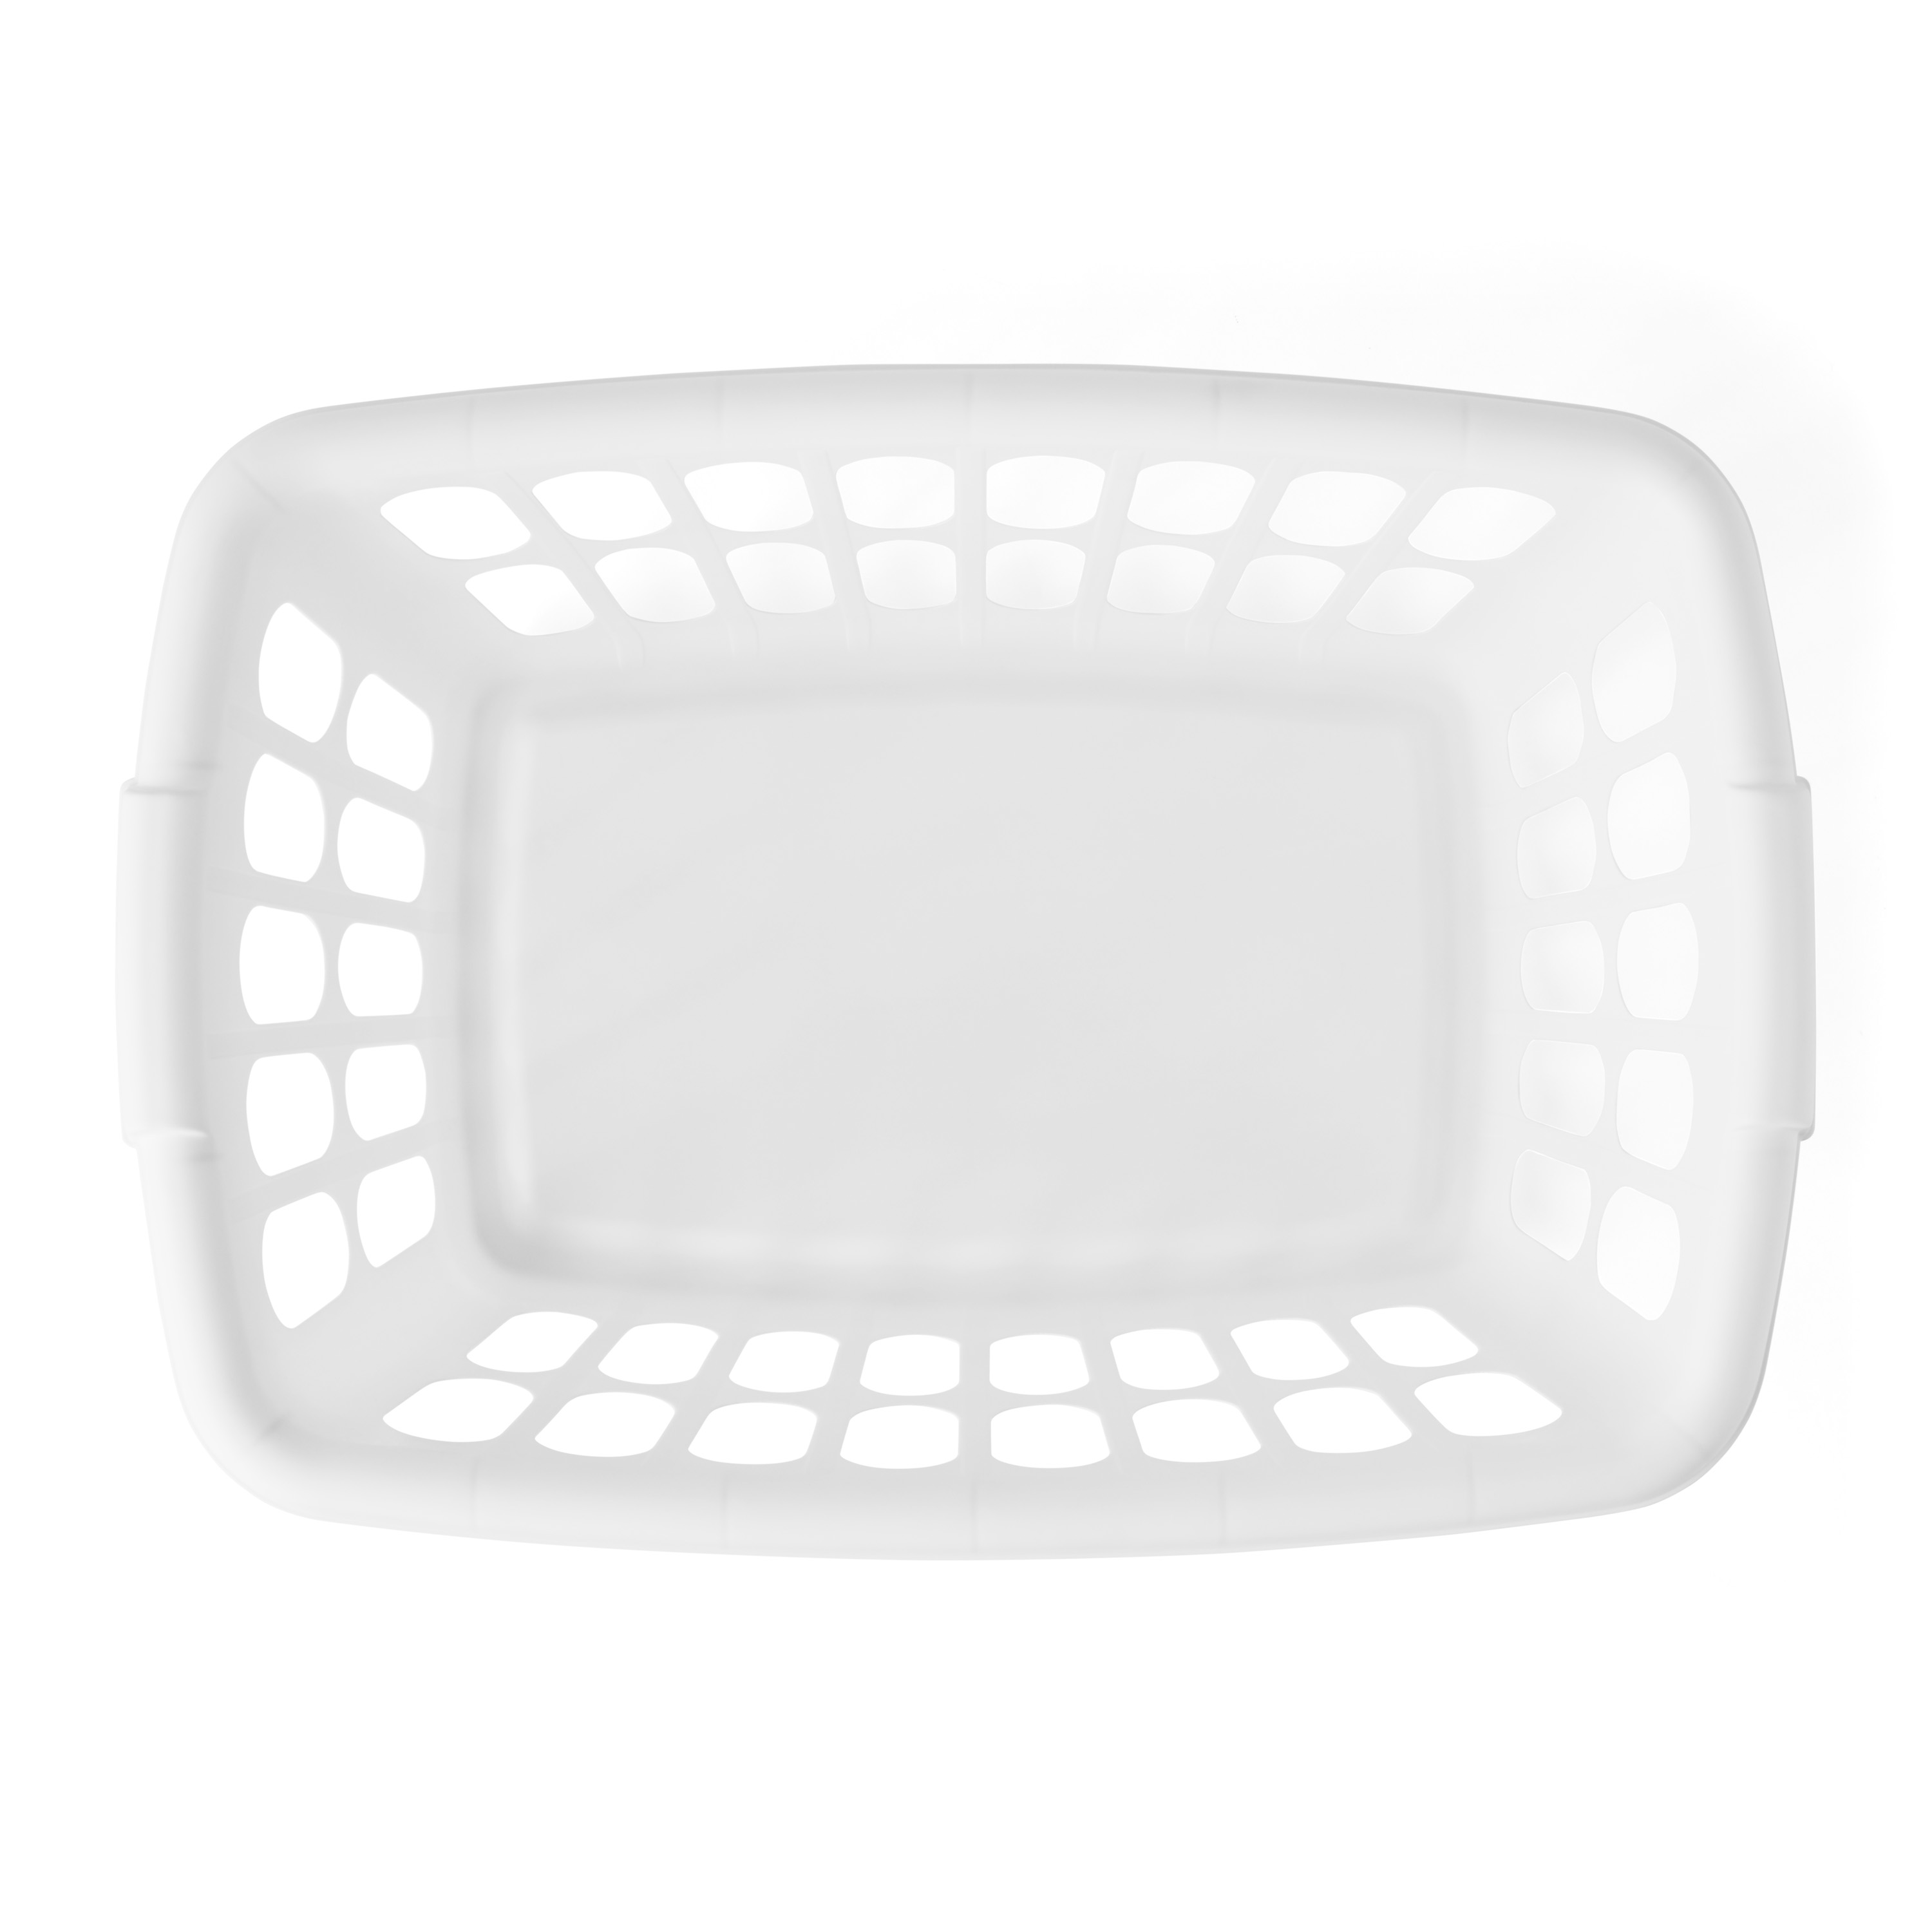 Starplast 1.5-Bushel Rectangular Plastic Laundry Basket, White, 6 Pack ...